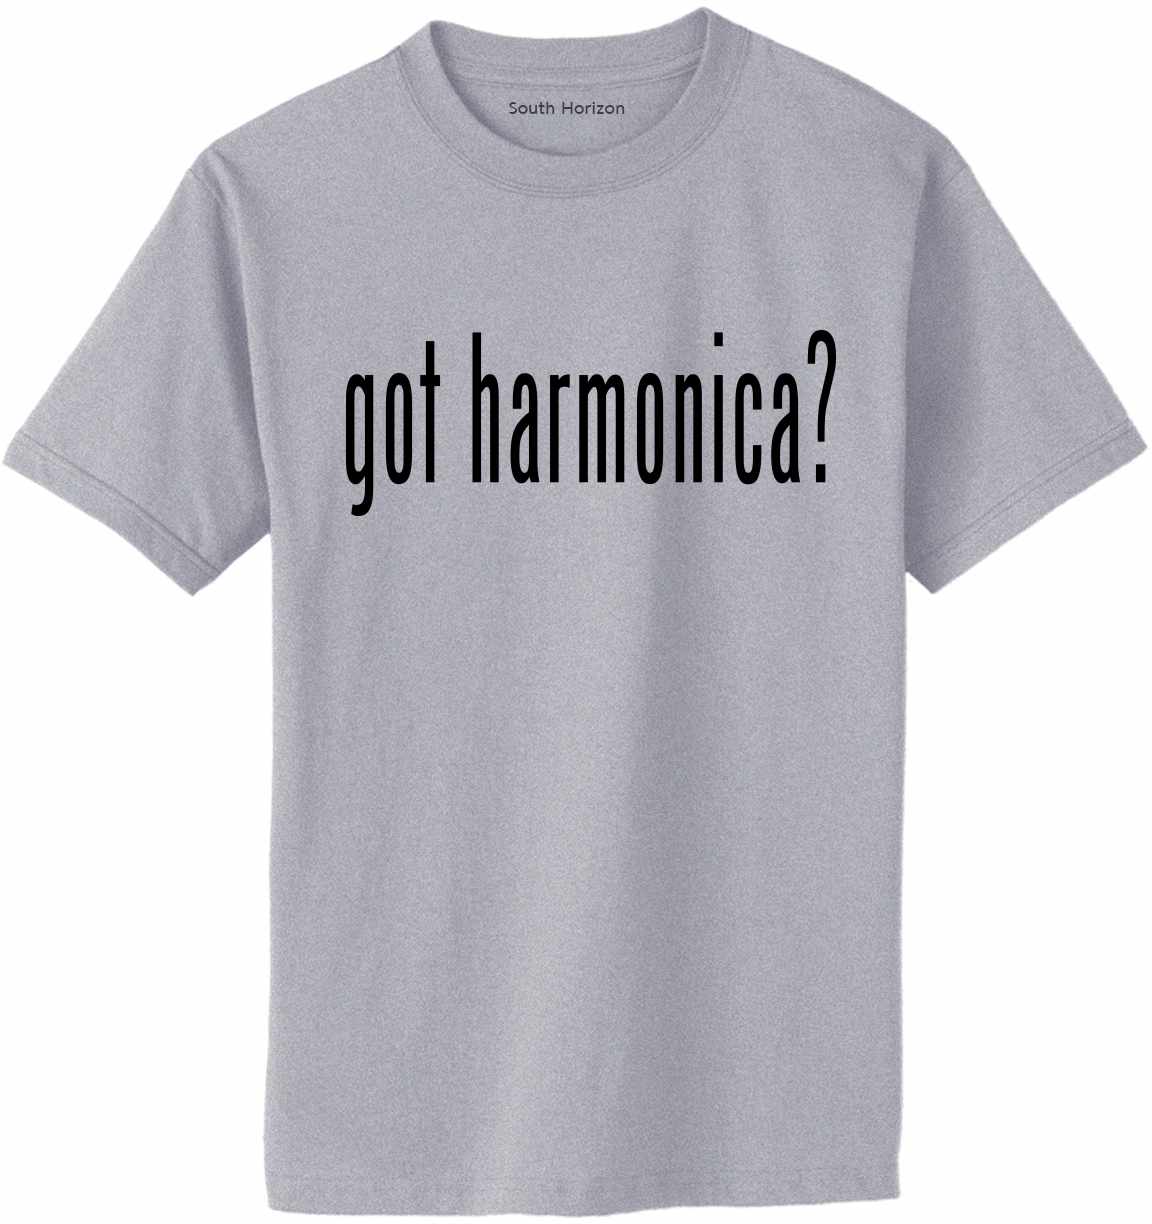 Got Harmonica? Adult T-Shirt (#893-1)